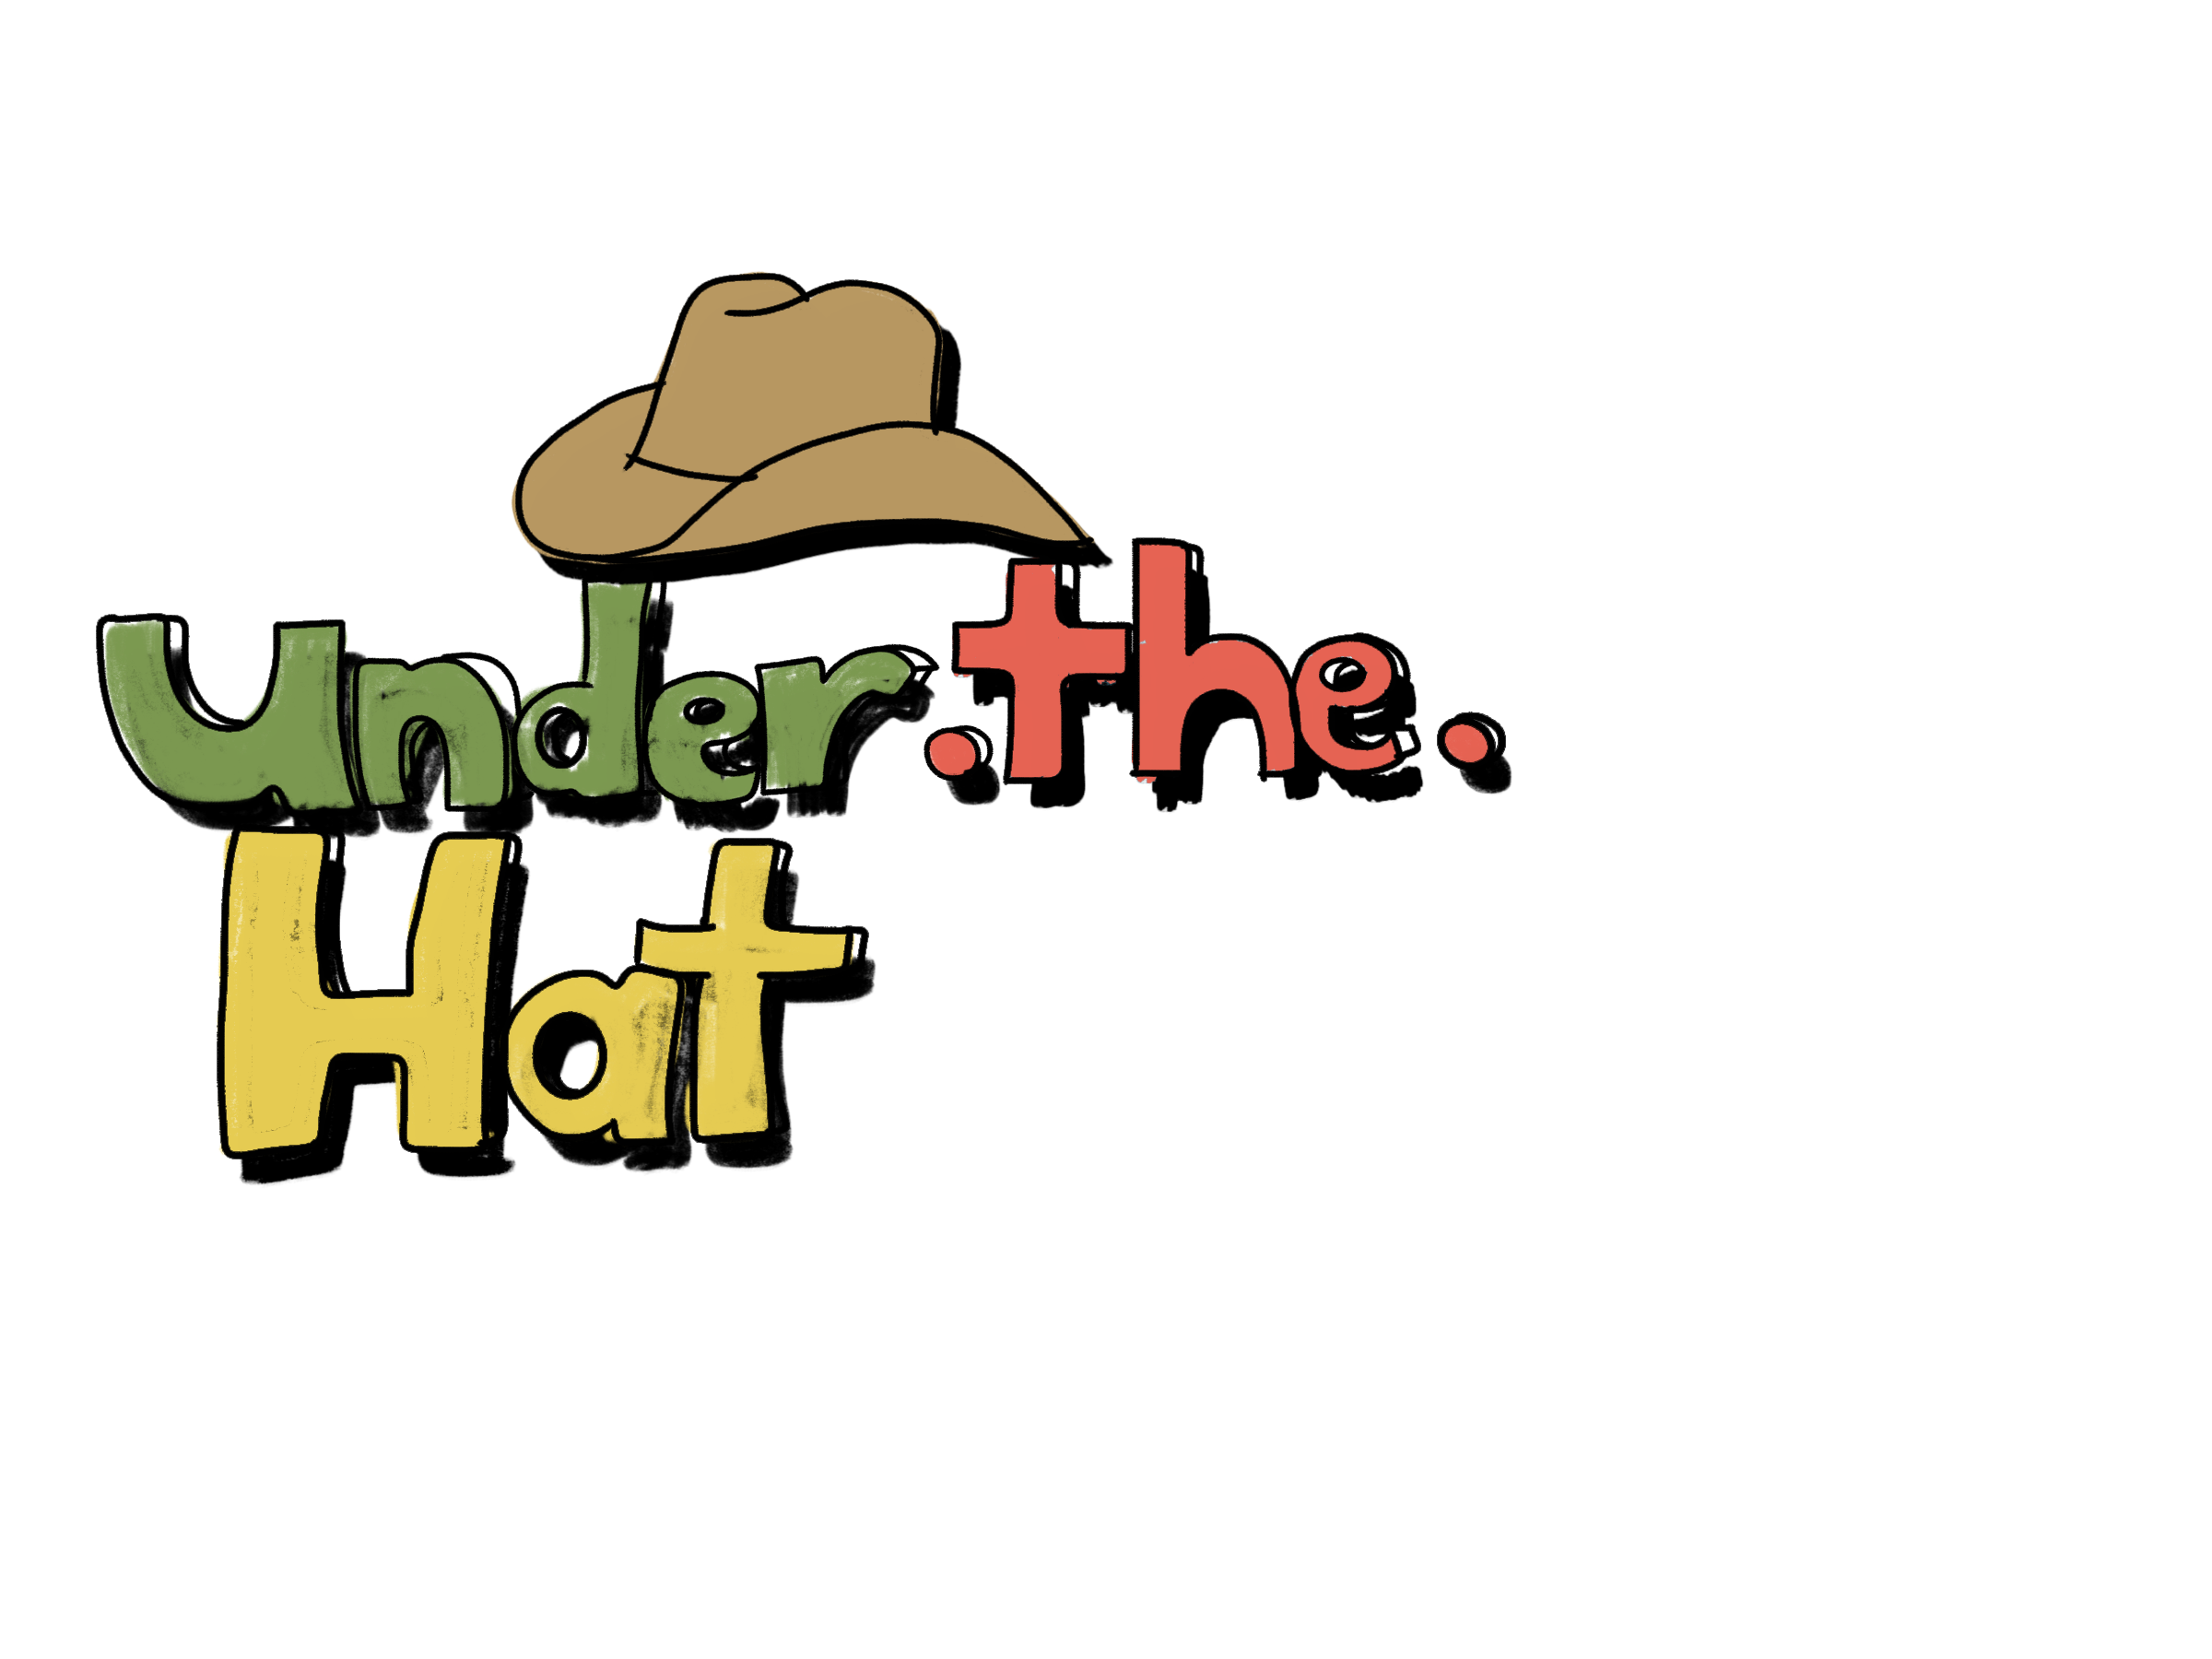 Under the Hat